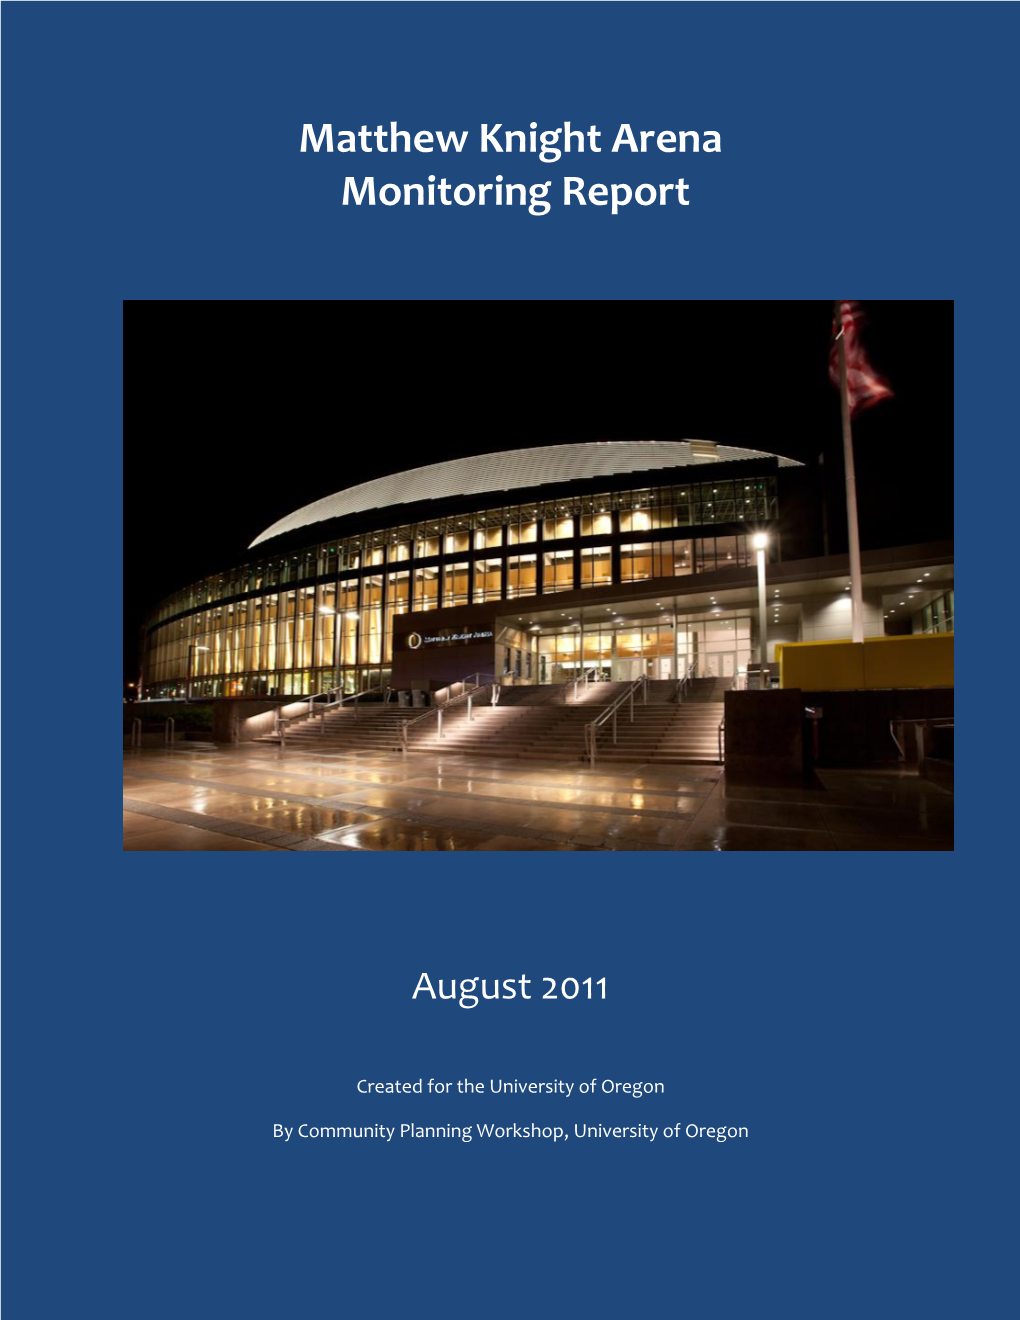 Matthew Knight Arena Monitoring Report